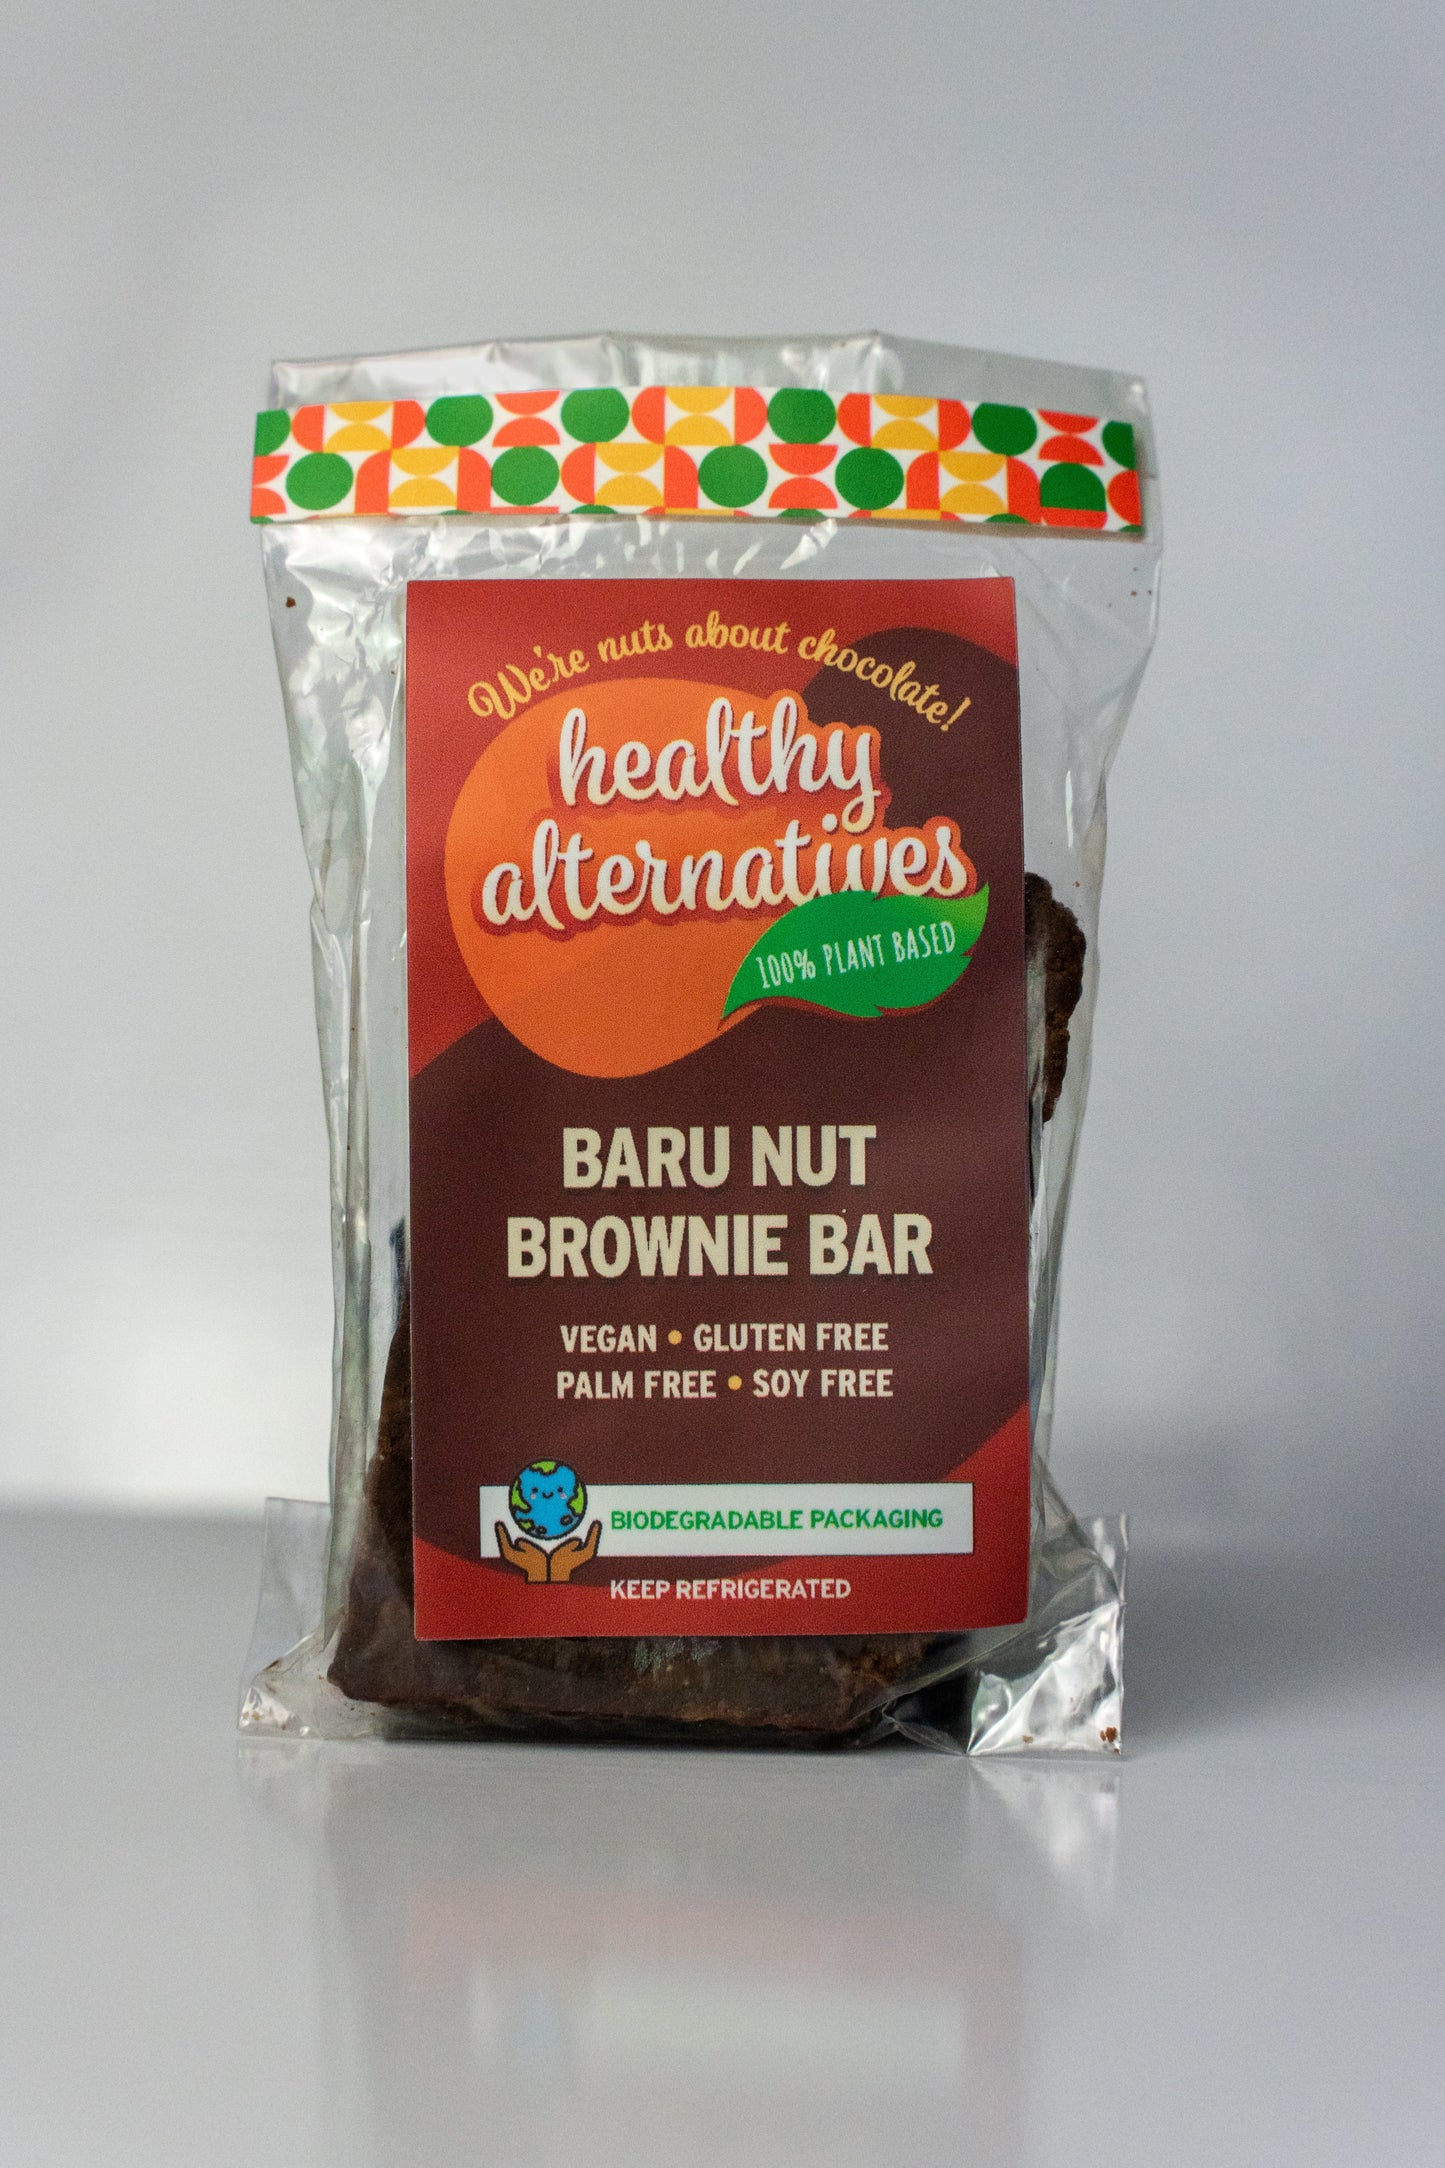 Baru Nut Brownie Bar Vegan Gluten Free Palm Free Soy Free Organic Local Business Toronto Ontario Canada 